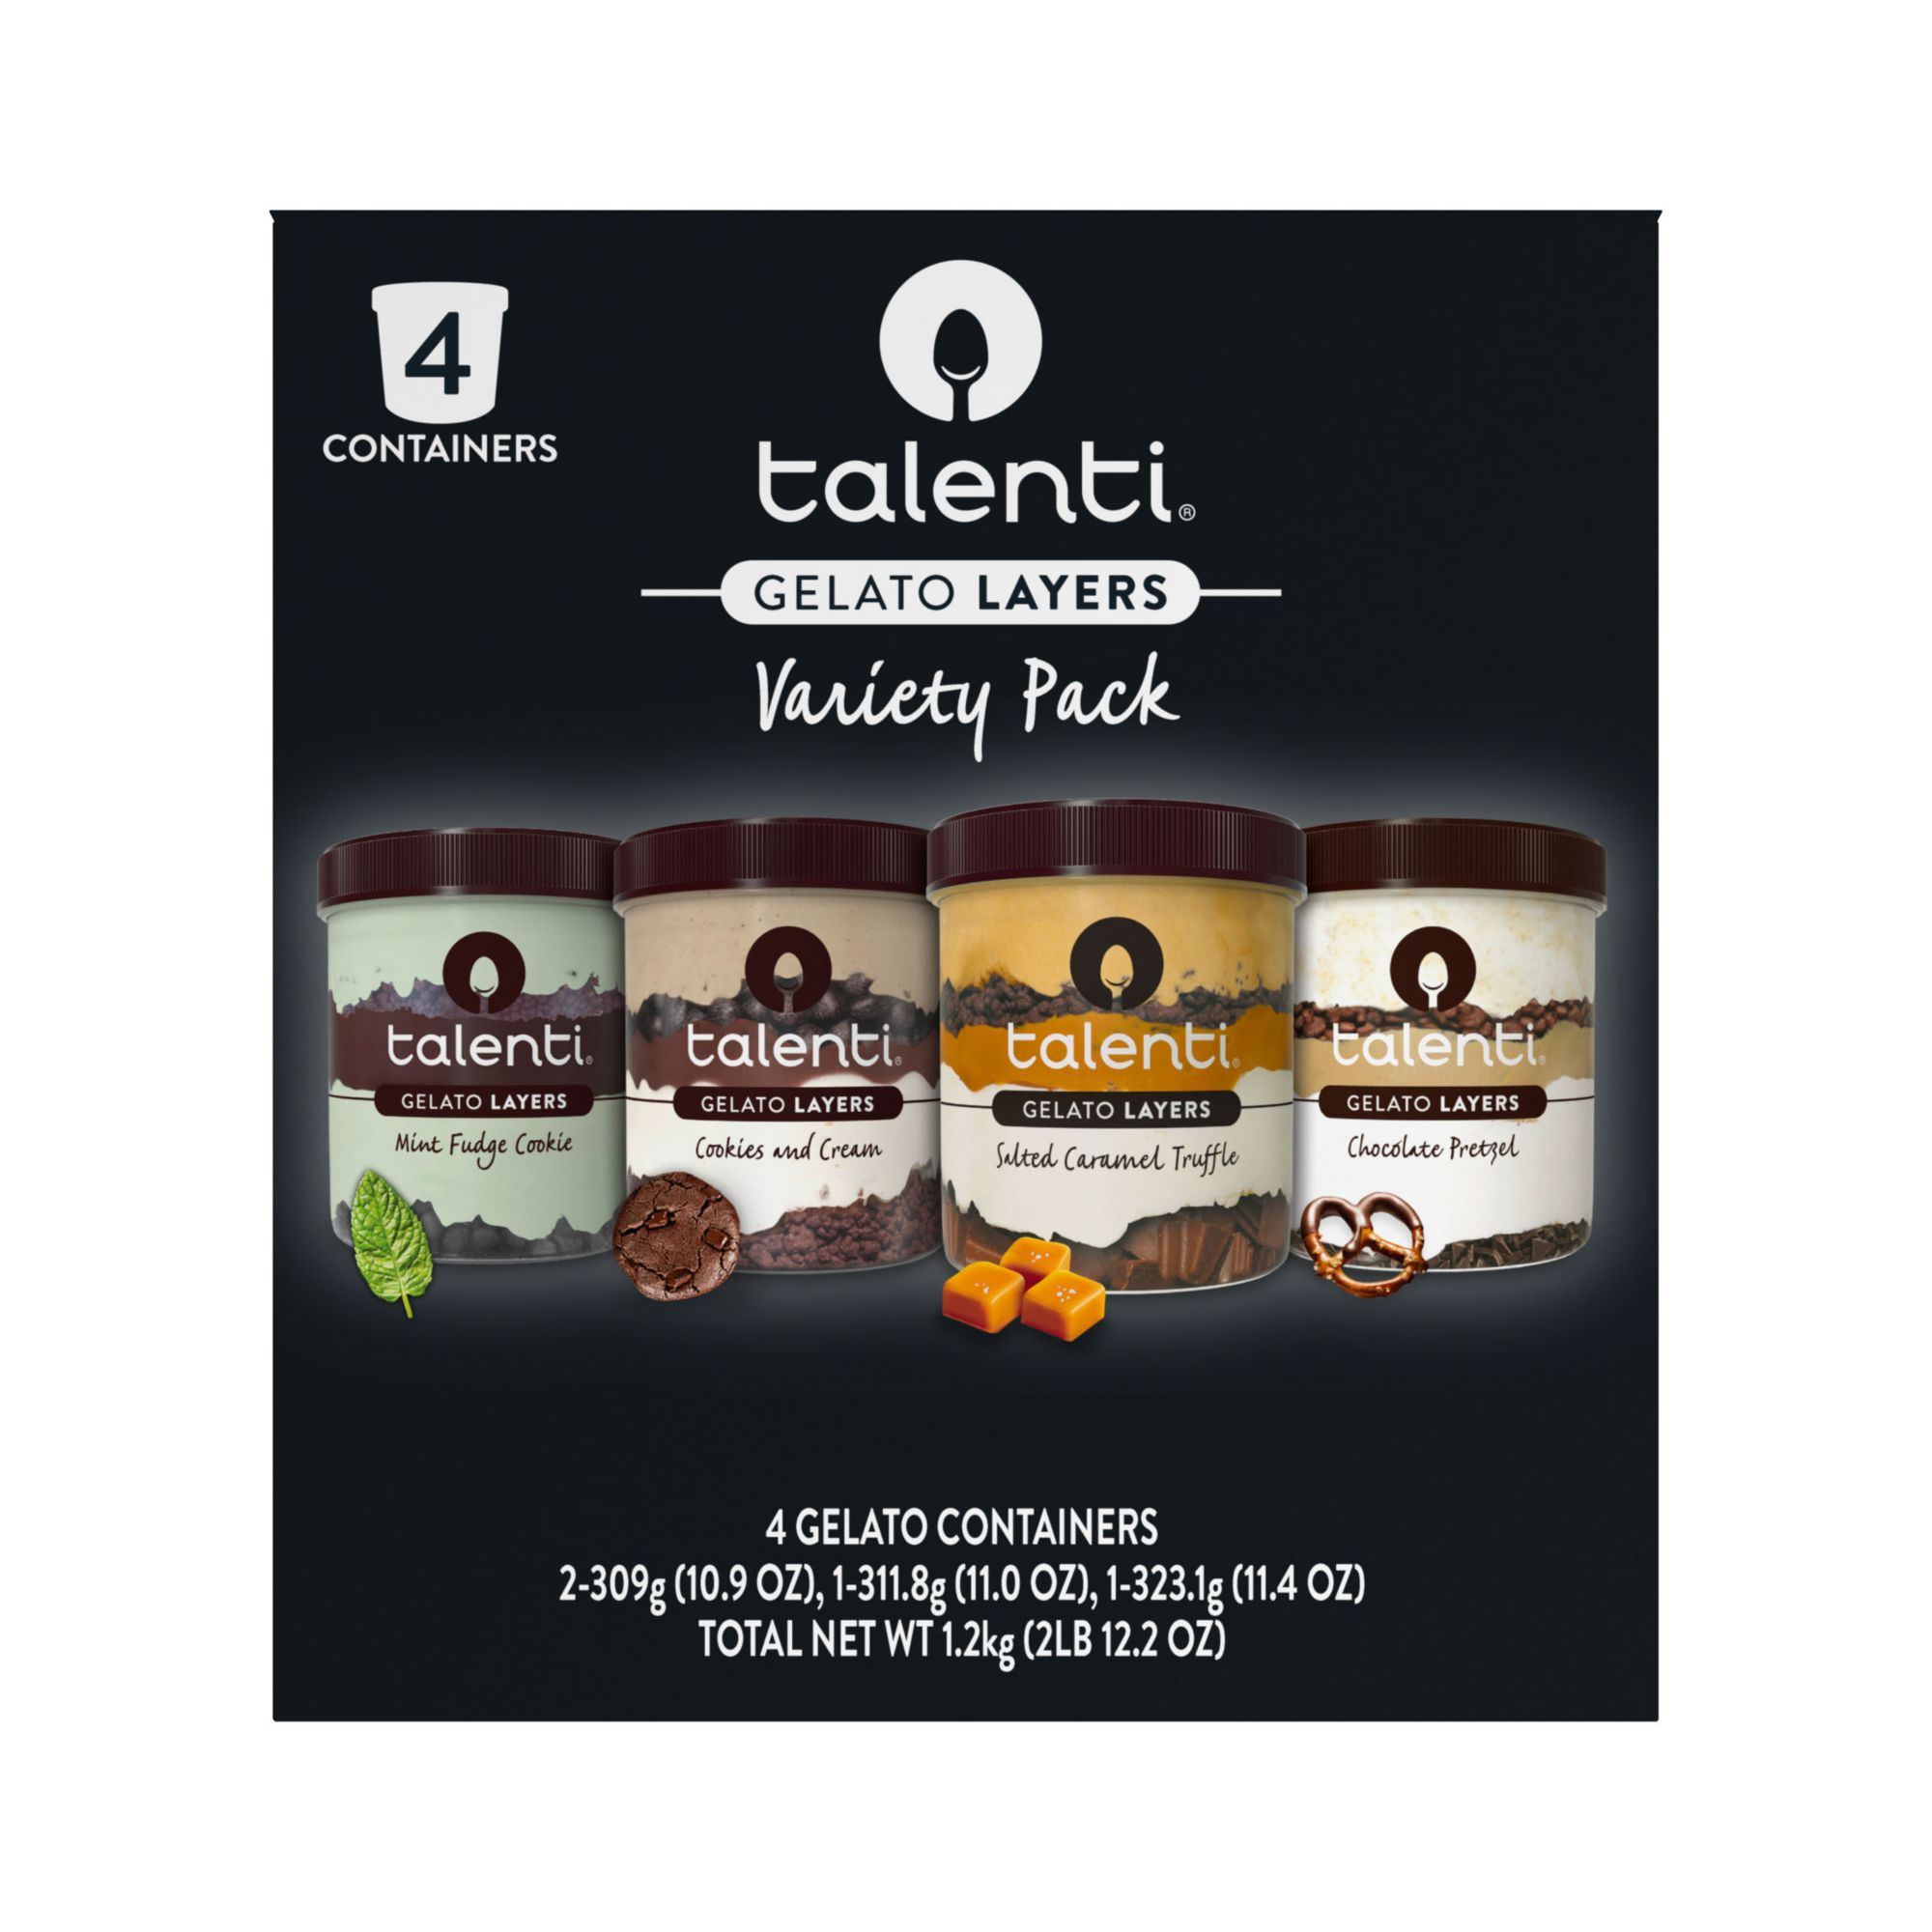 Talenti Jars by Dani Layered Gelato Flavors